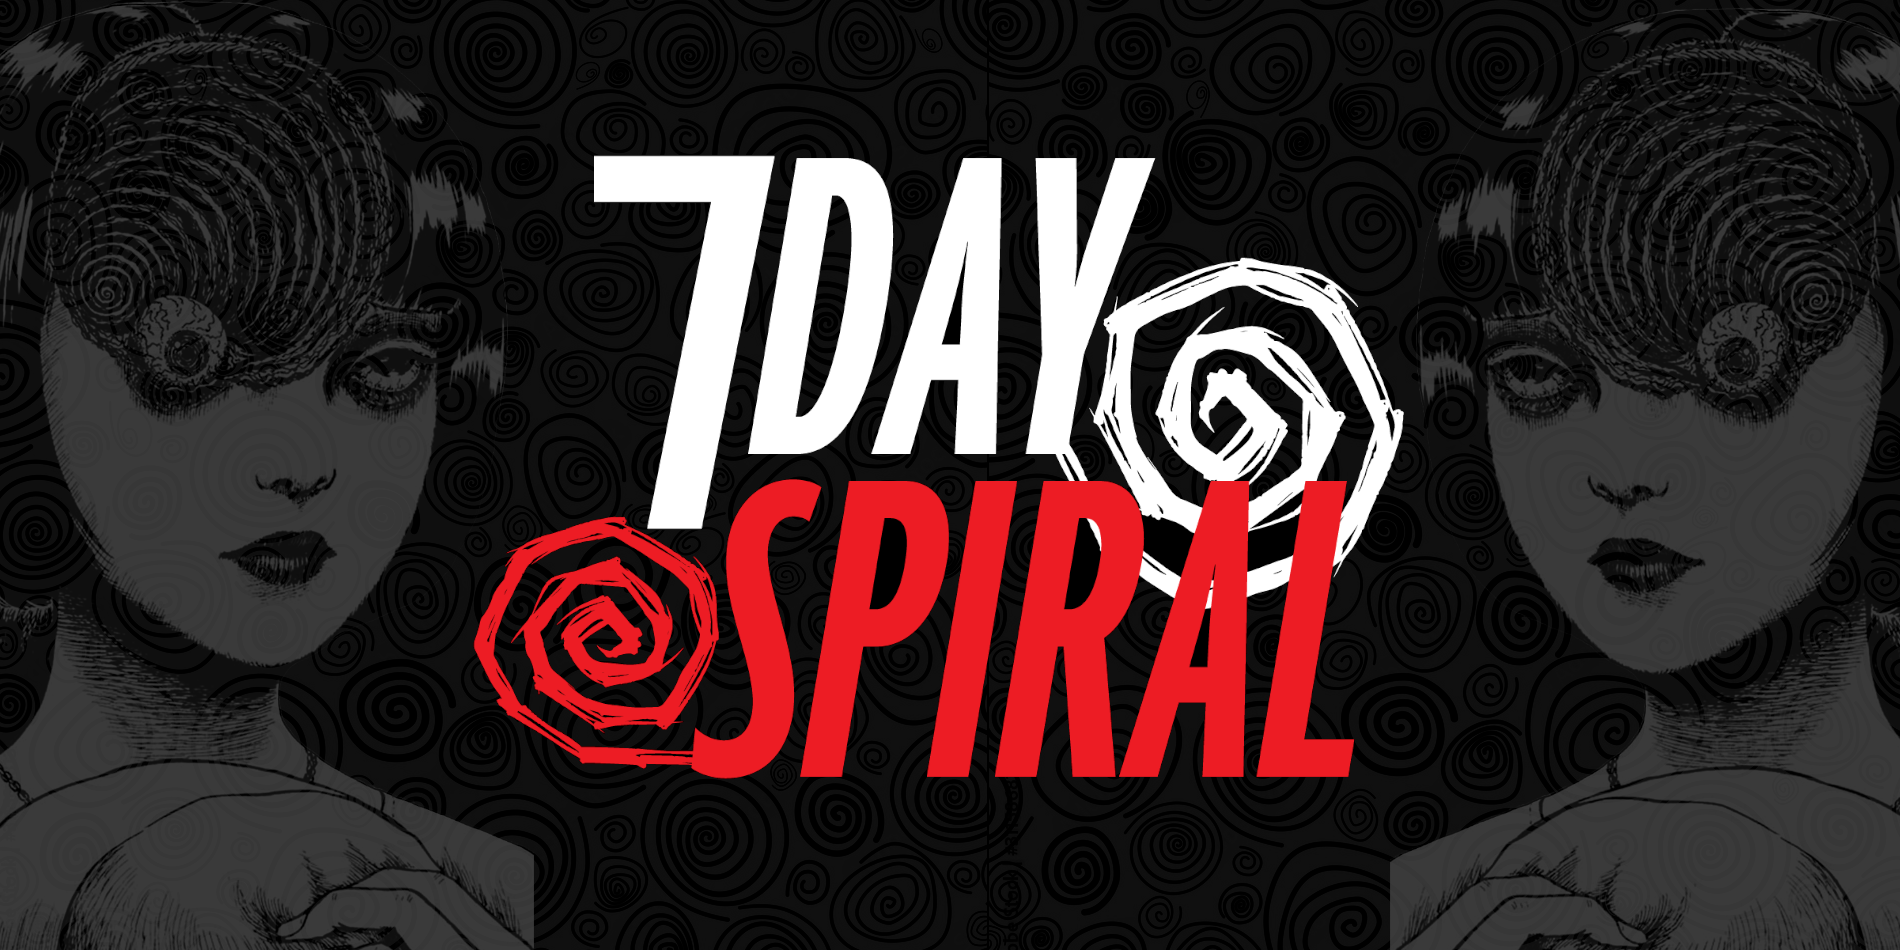 7 Day Spiral: A Week Of Junji Ito-Like Terror